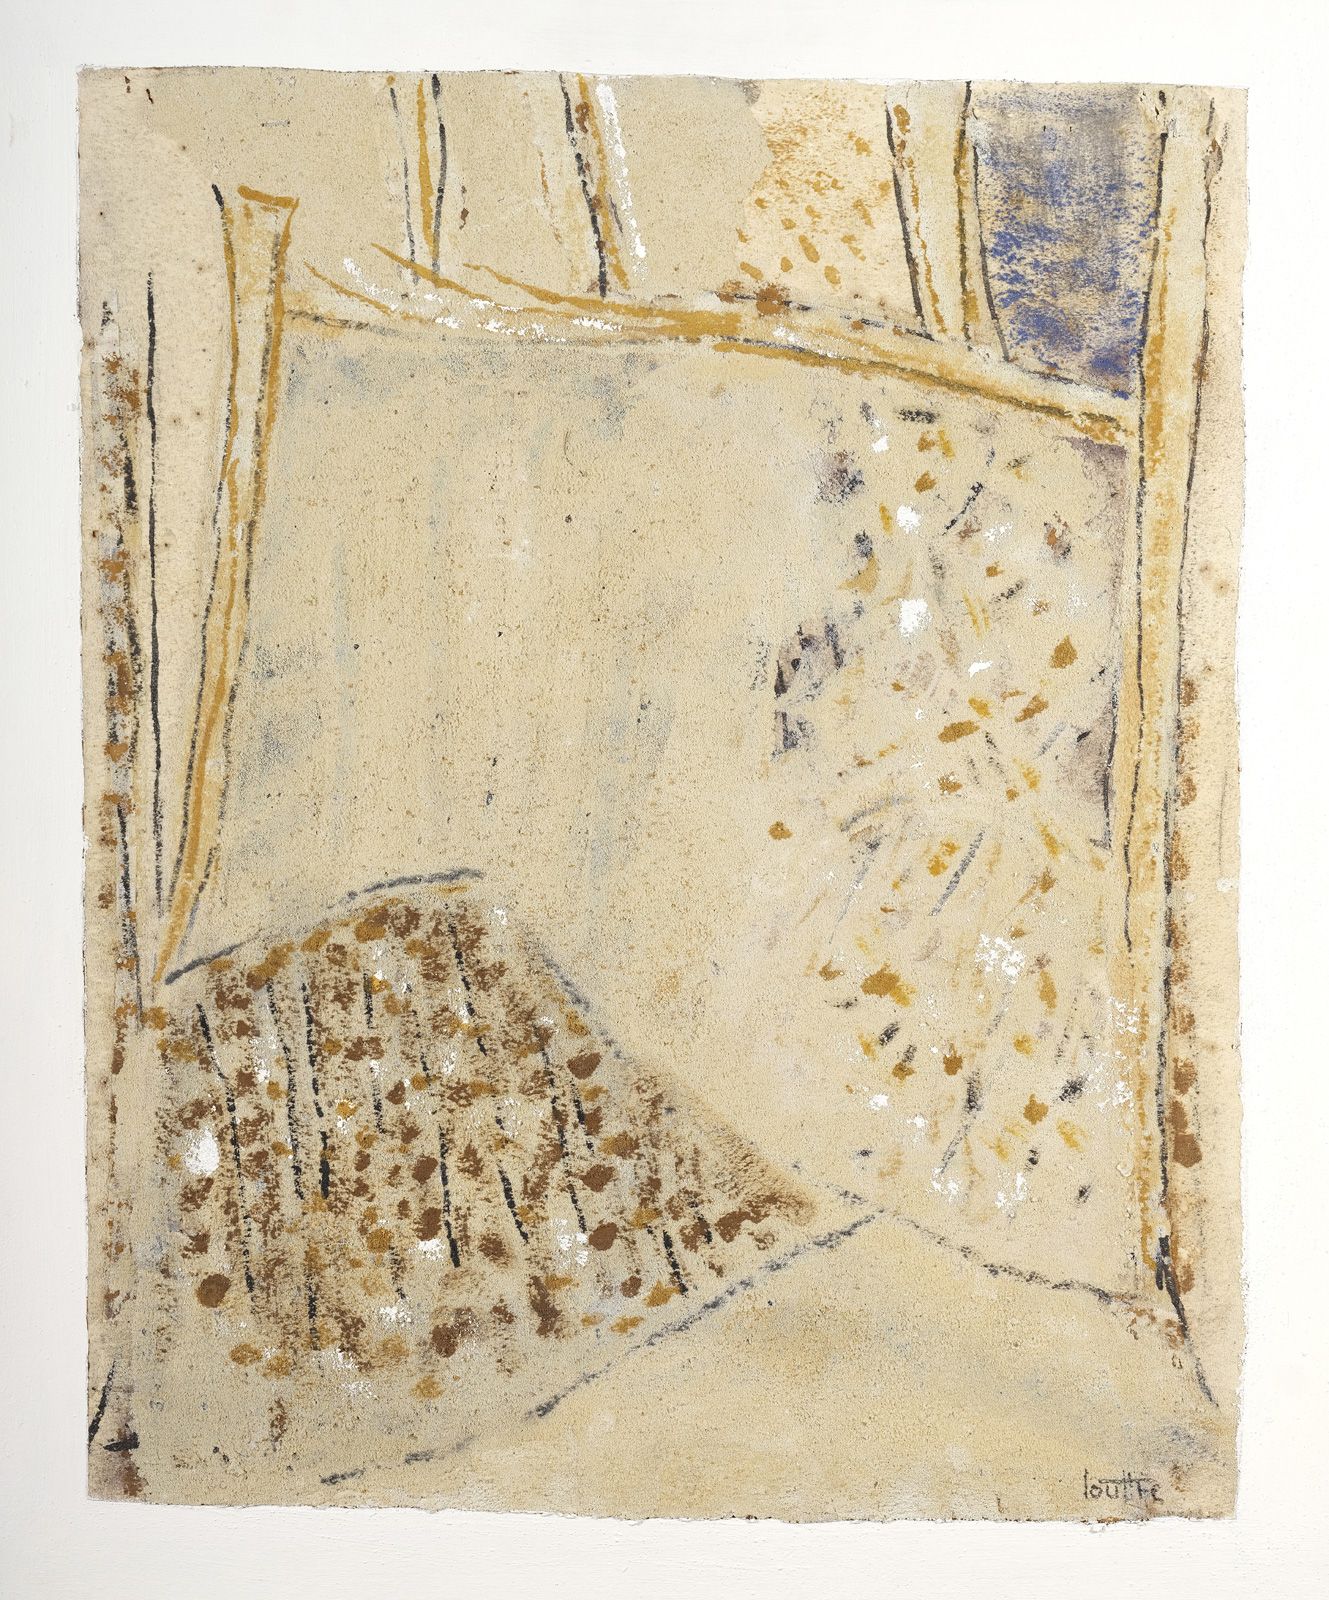 Null 沃尔夫拉姆(1926-2012)

Peinturelle

纸上混合媒介和沙子，右下方签名，背面有题名。

78 x 60厘米

证明：阿姆斯特丹K&hellip;